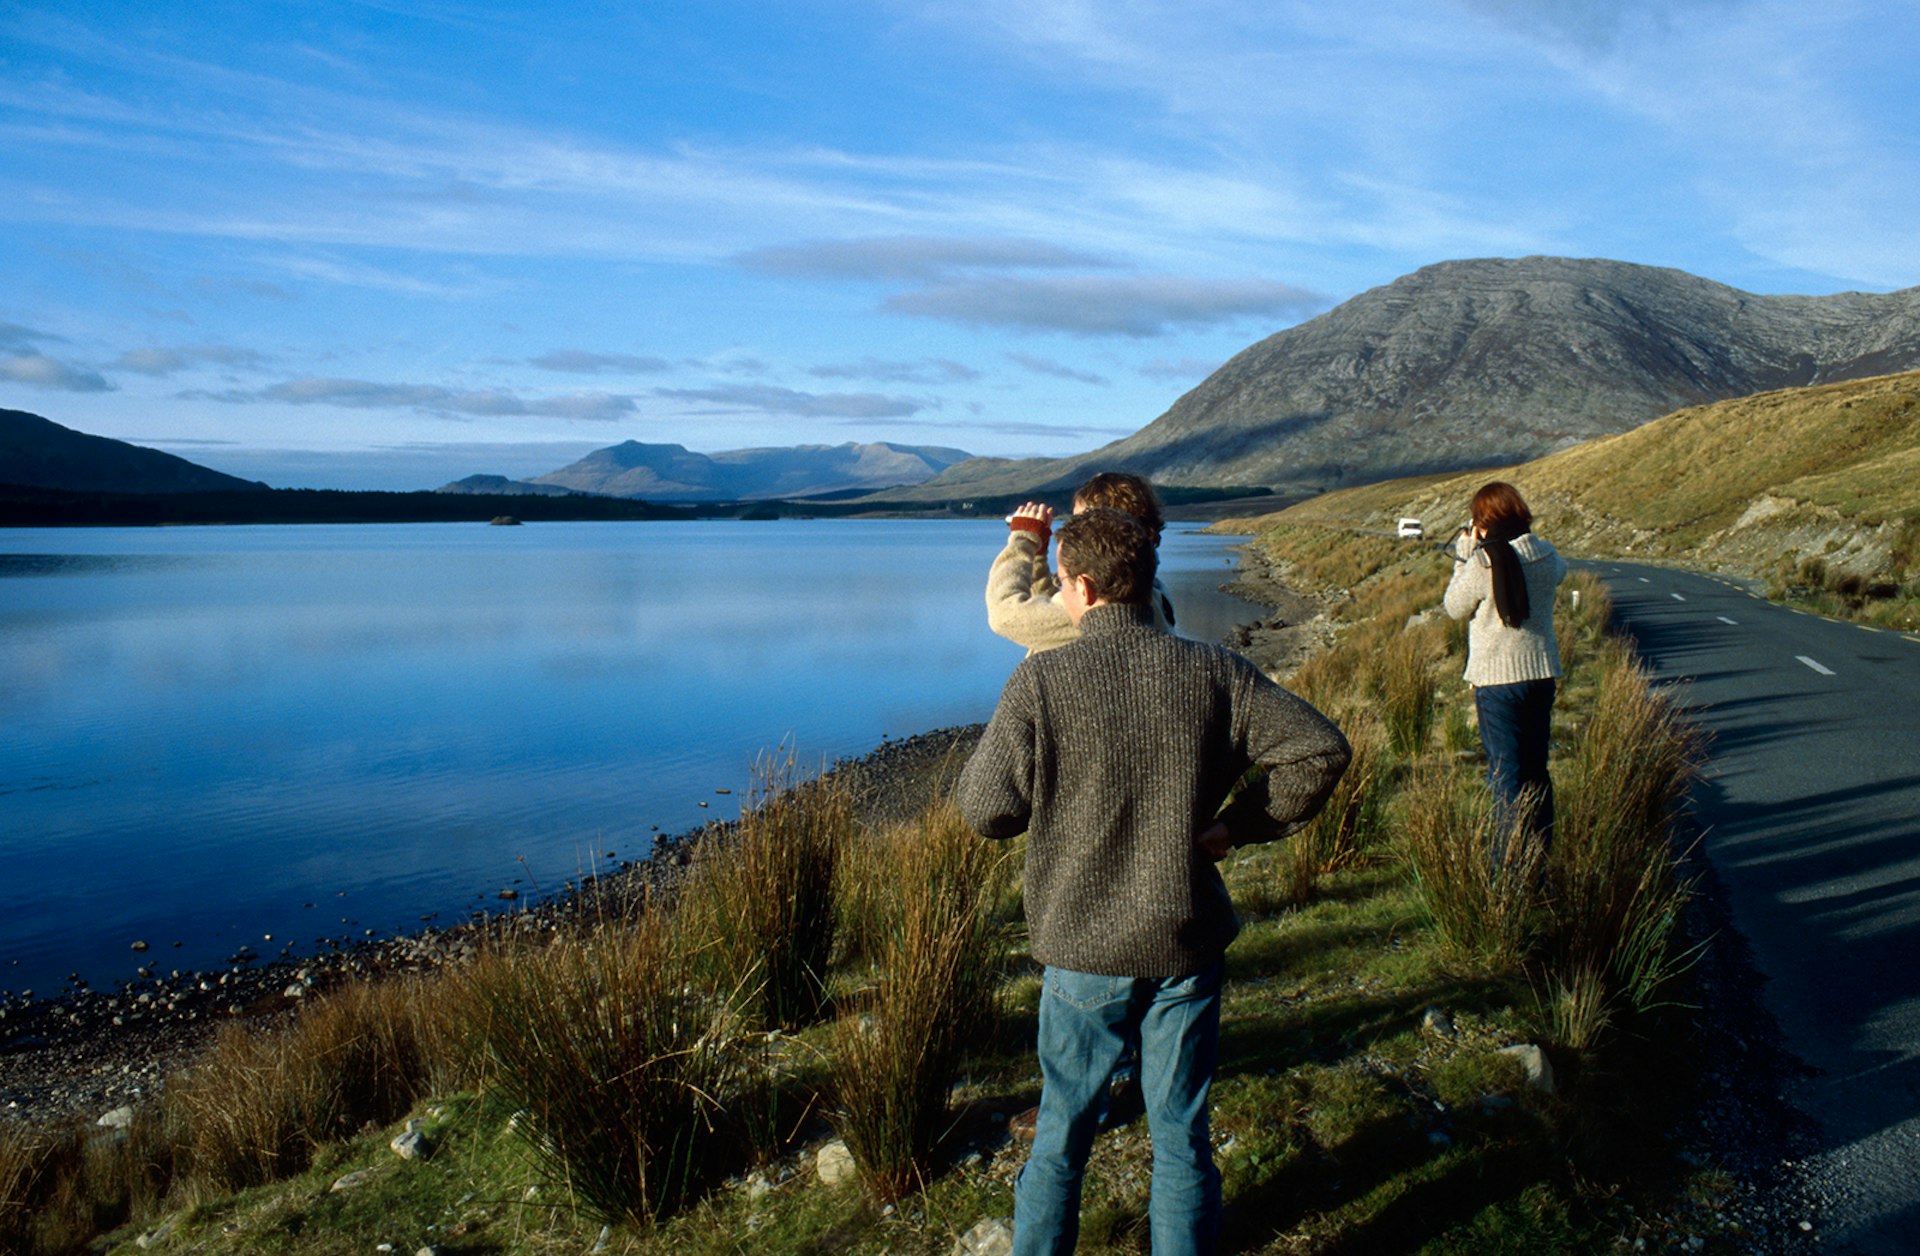 Travellers gaze at the astonishing scenery of Connemara